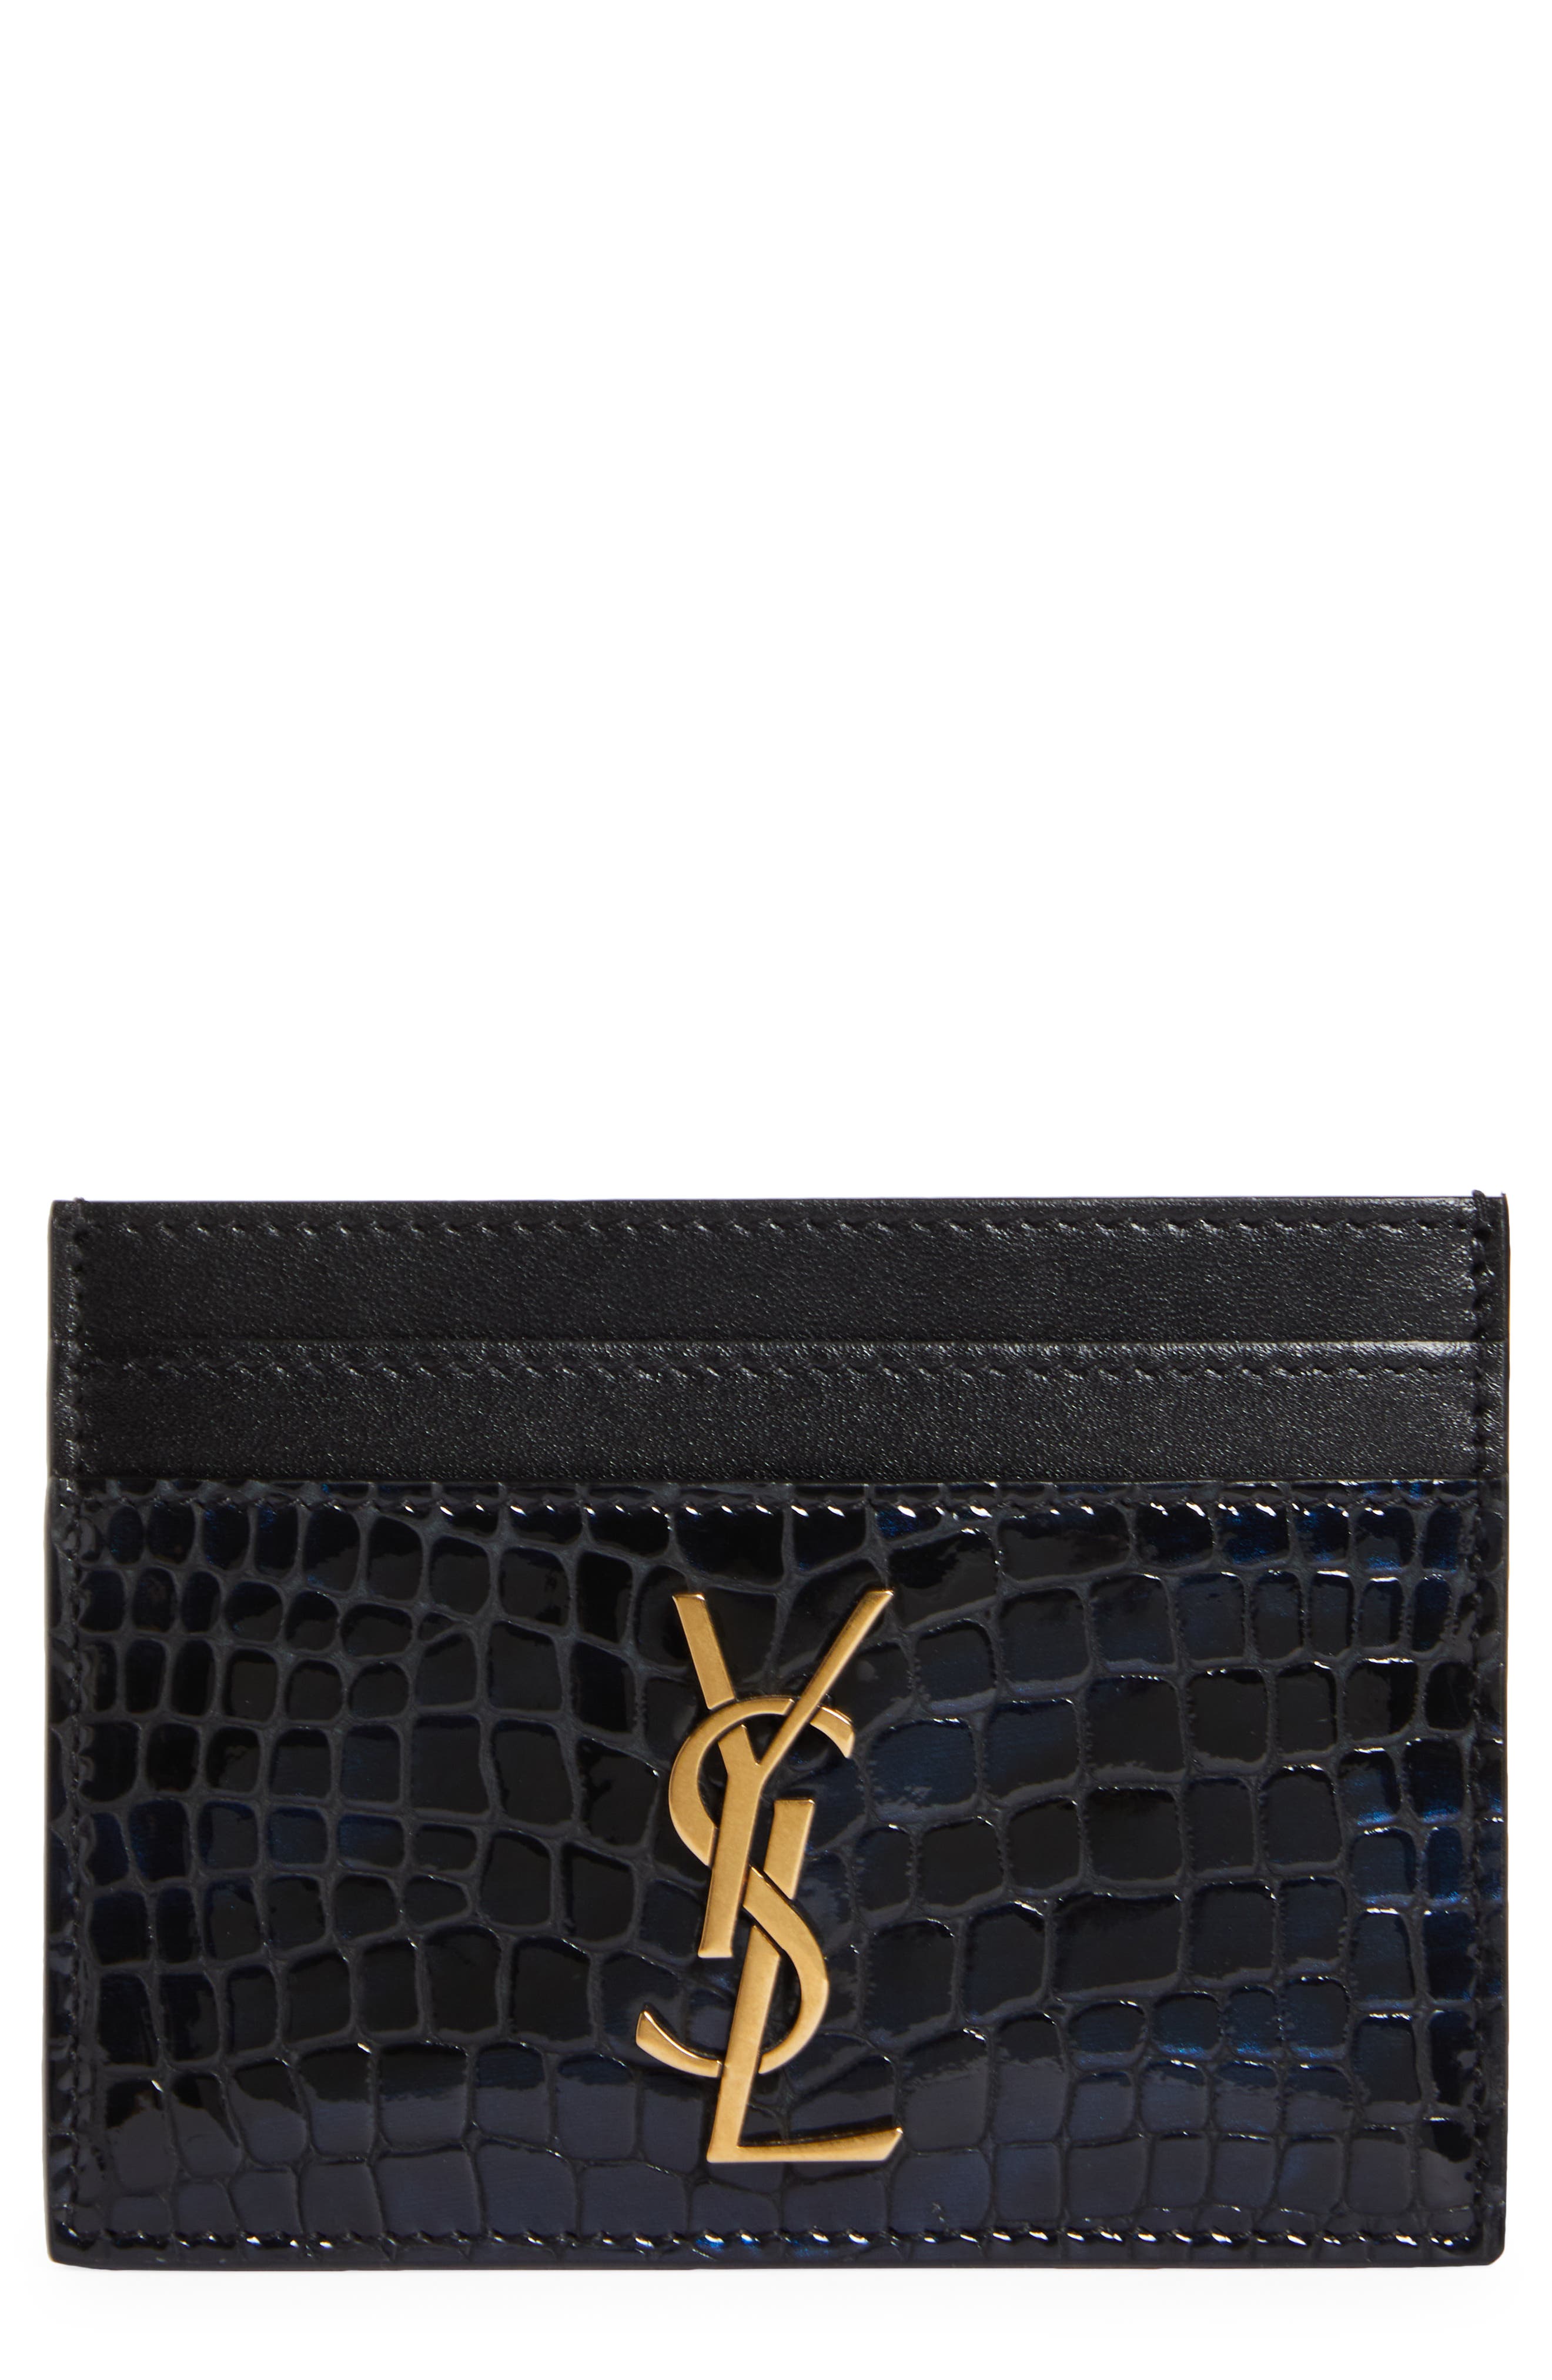 Saint Laurent Kate Medium Ysl Croc-Embossed Crossbody Bag Blue/Nero